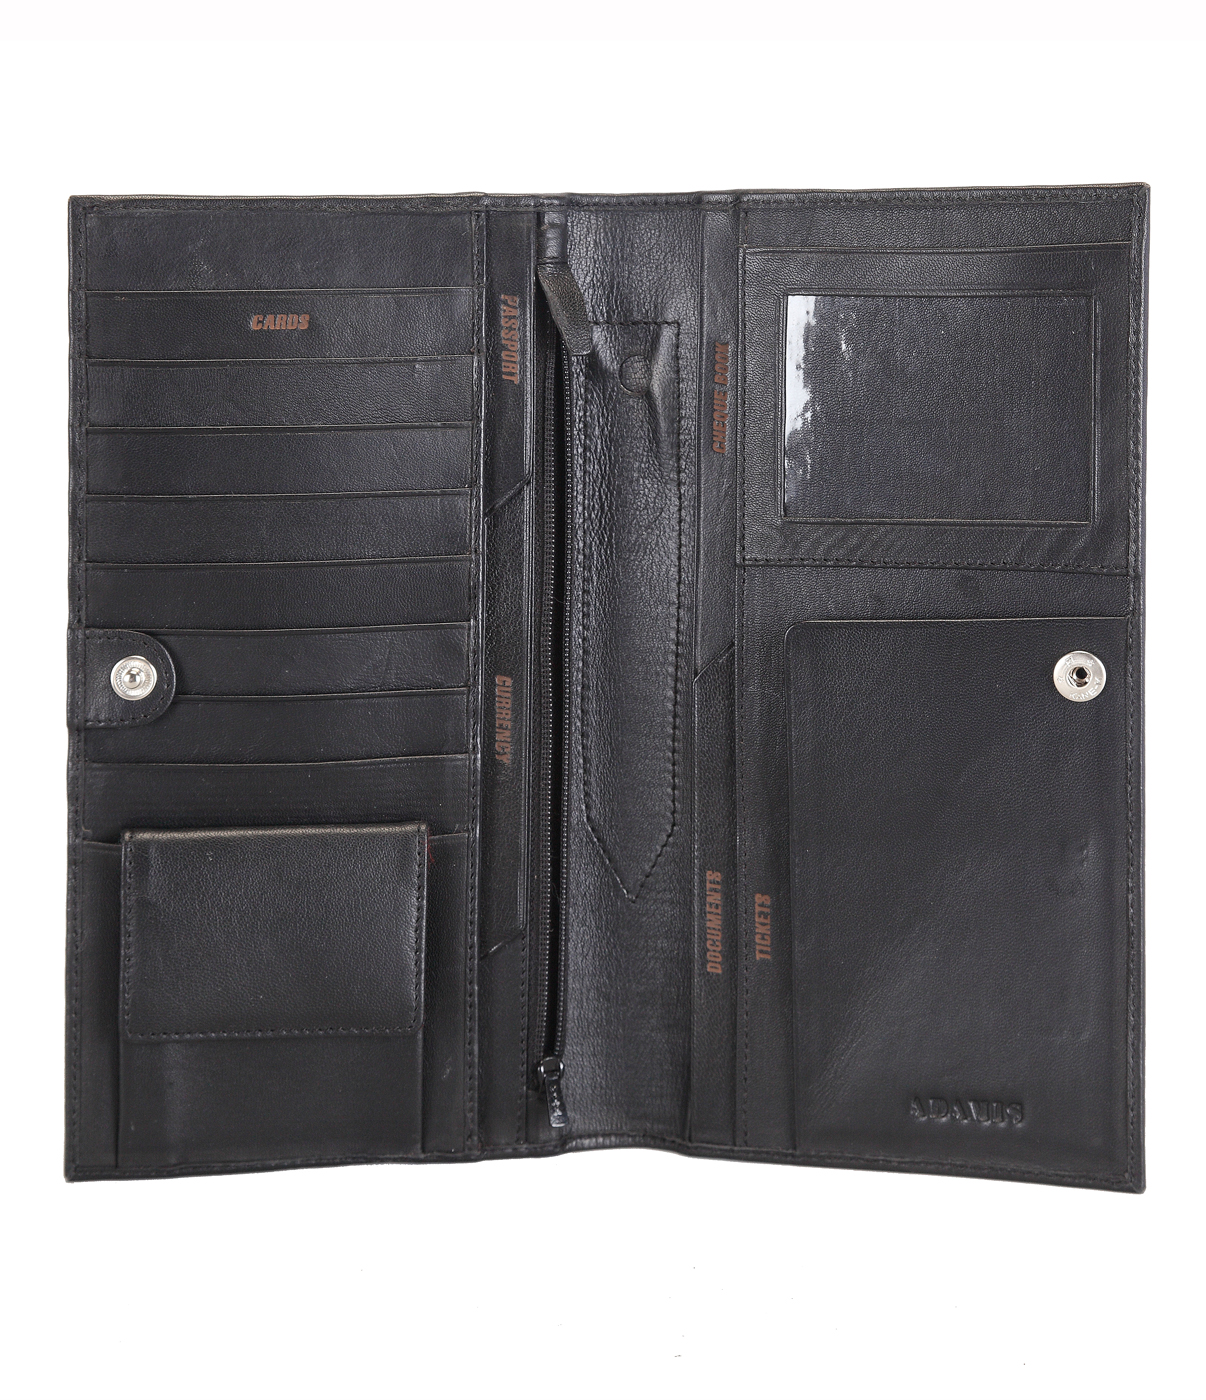 Wallet-Novio-Travel document wallet in soft Genuine Leather - Black